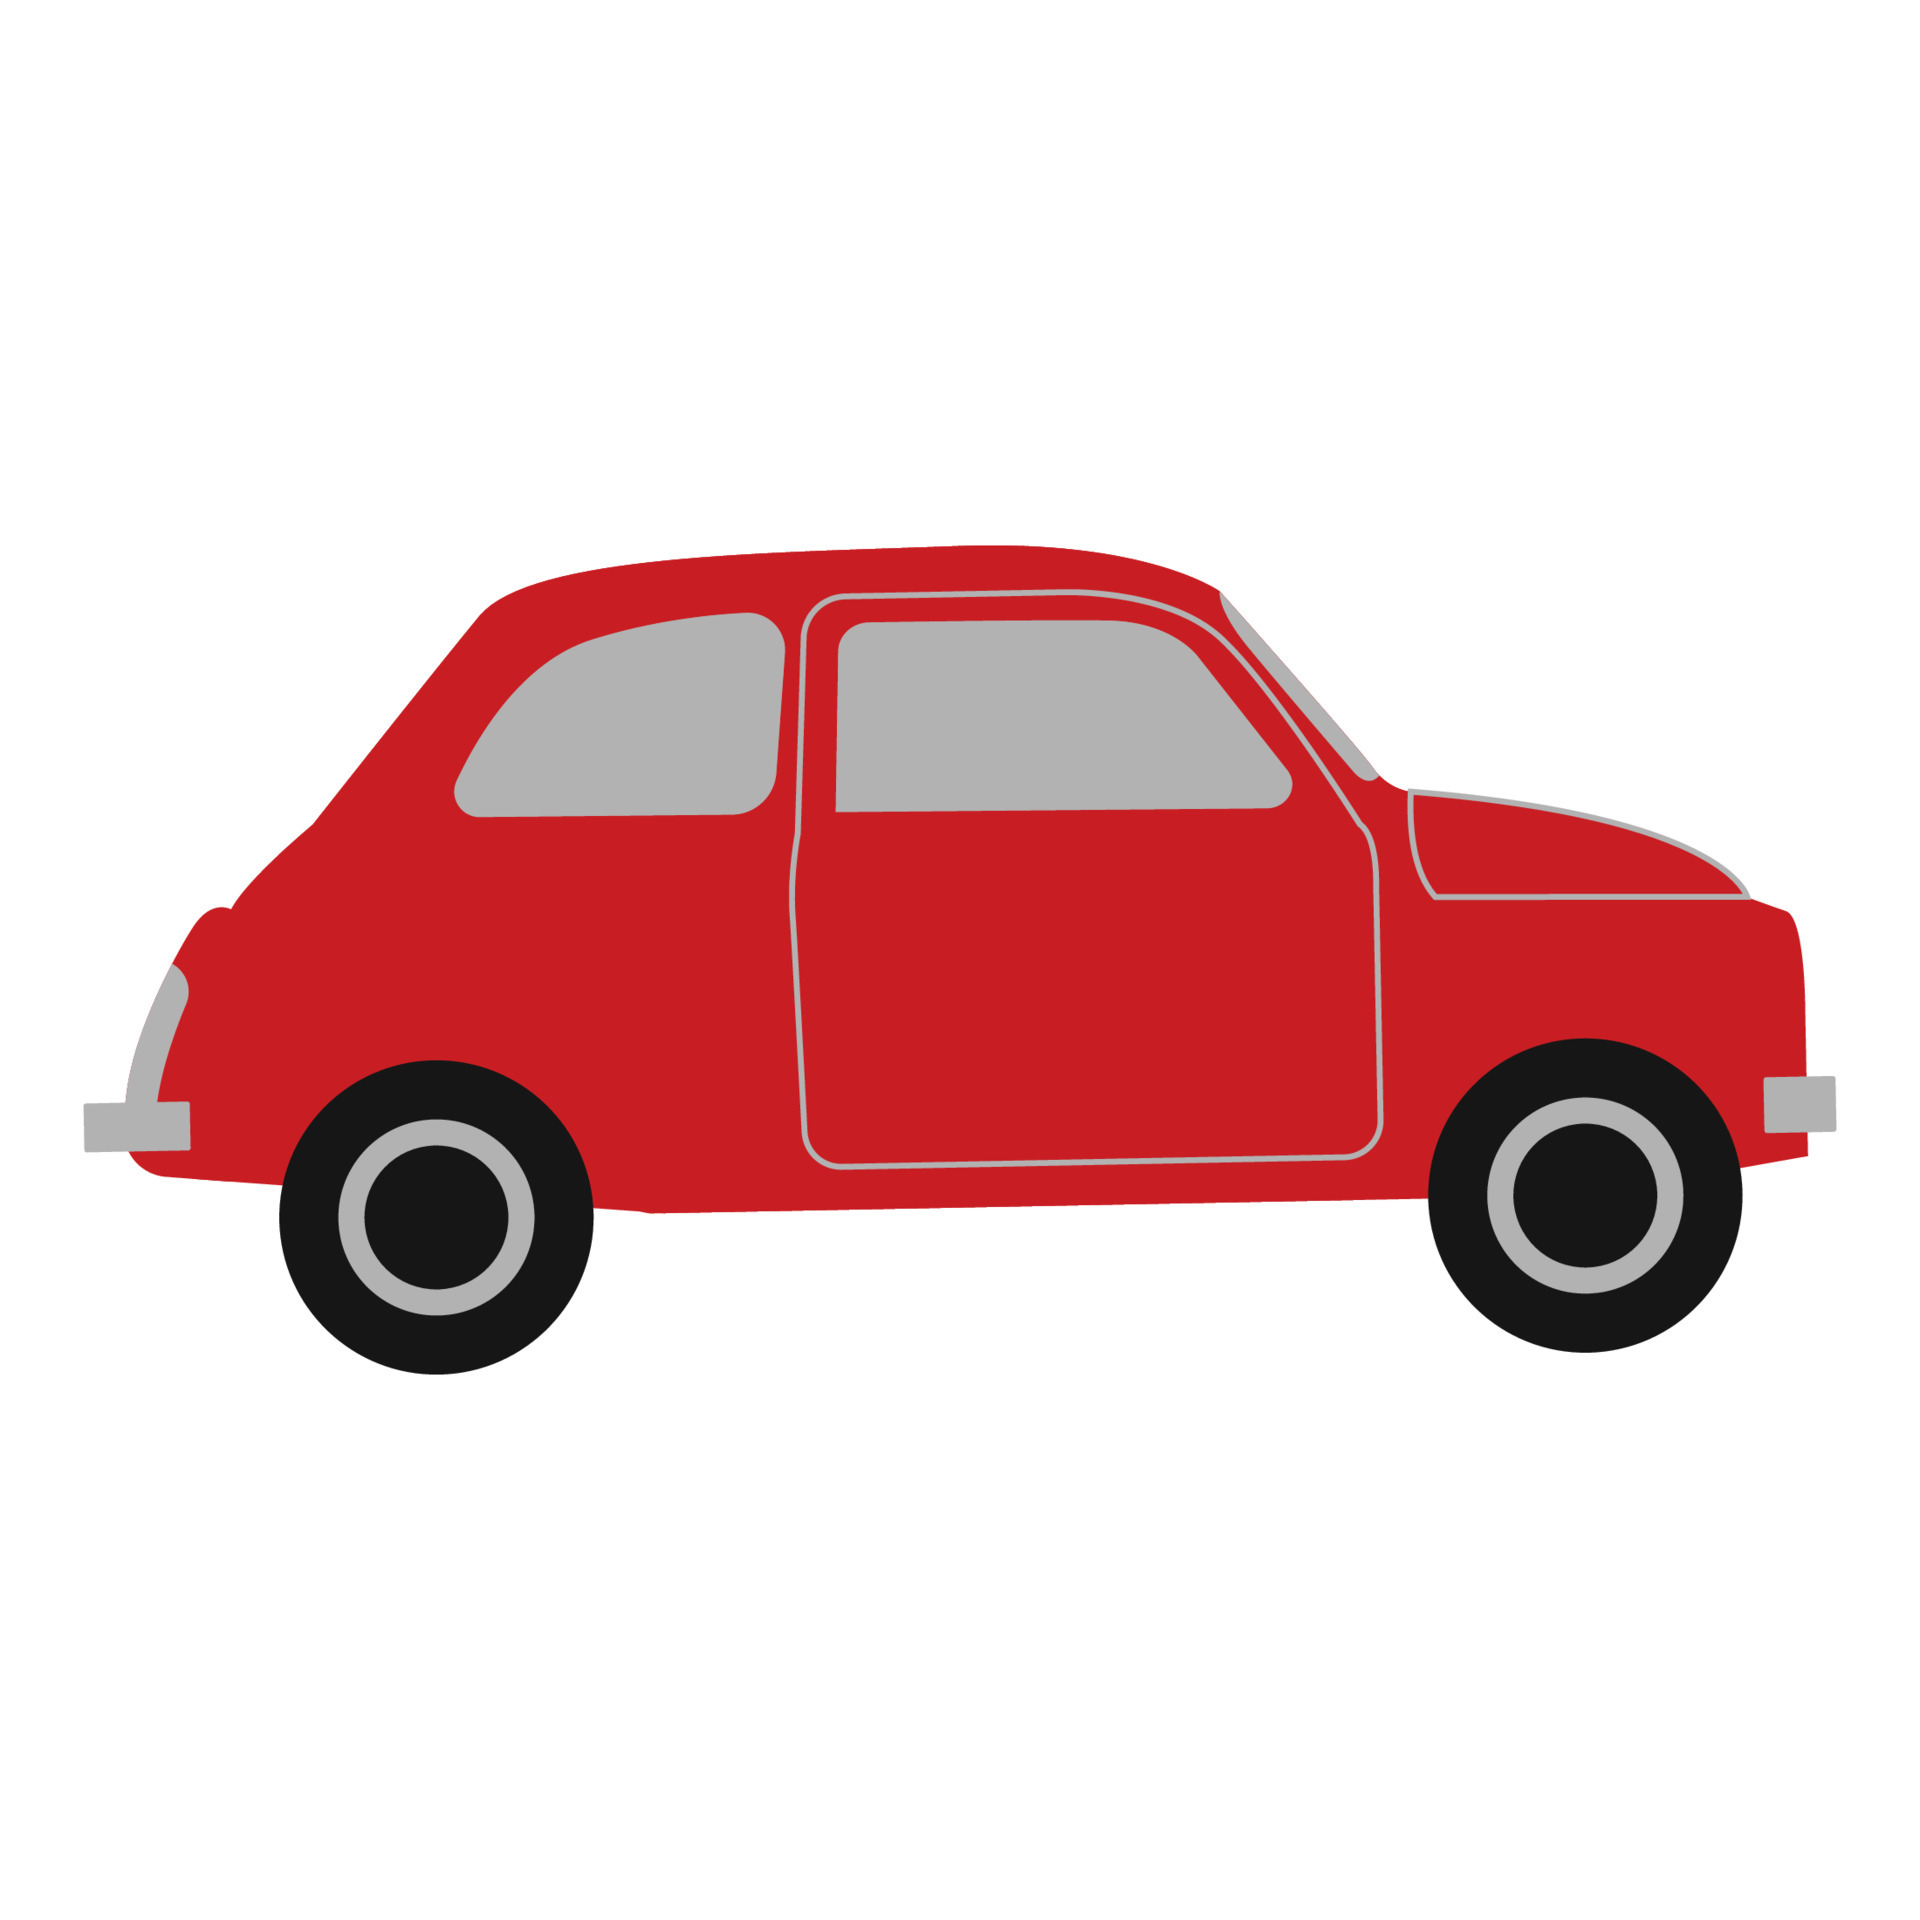 clip art of red car with cartoon design 5644001 Vector Art at Vecteezy